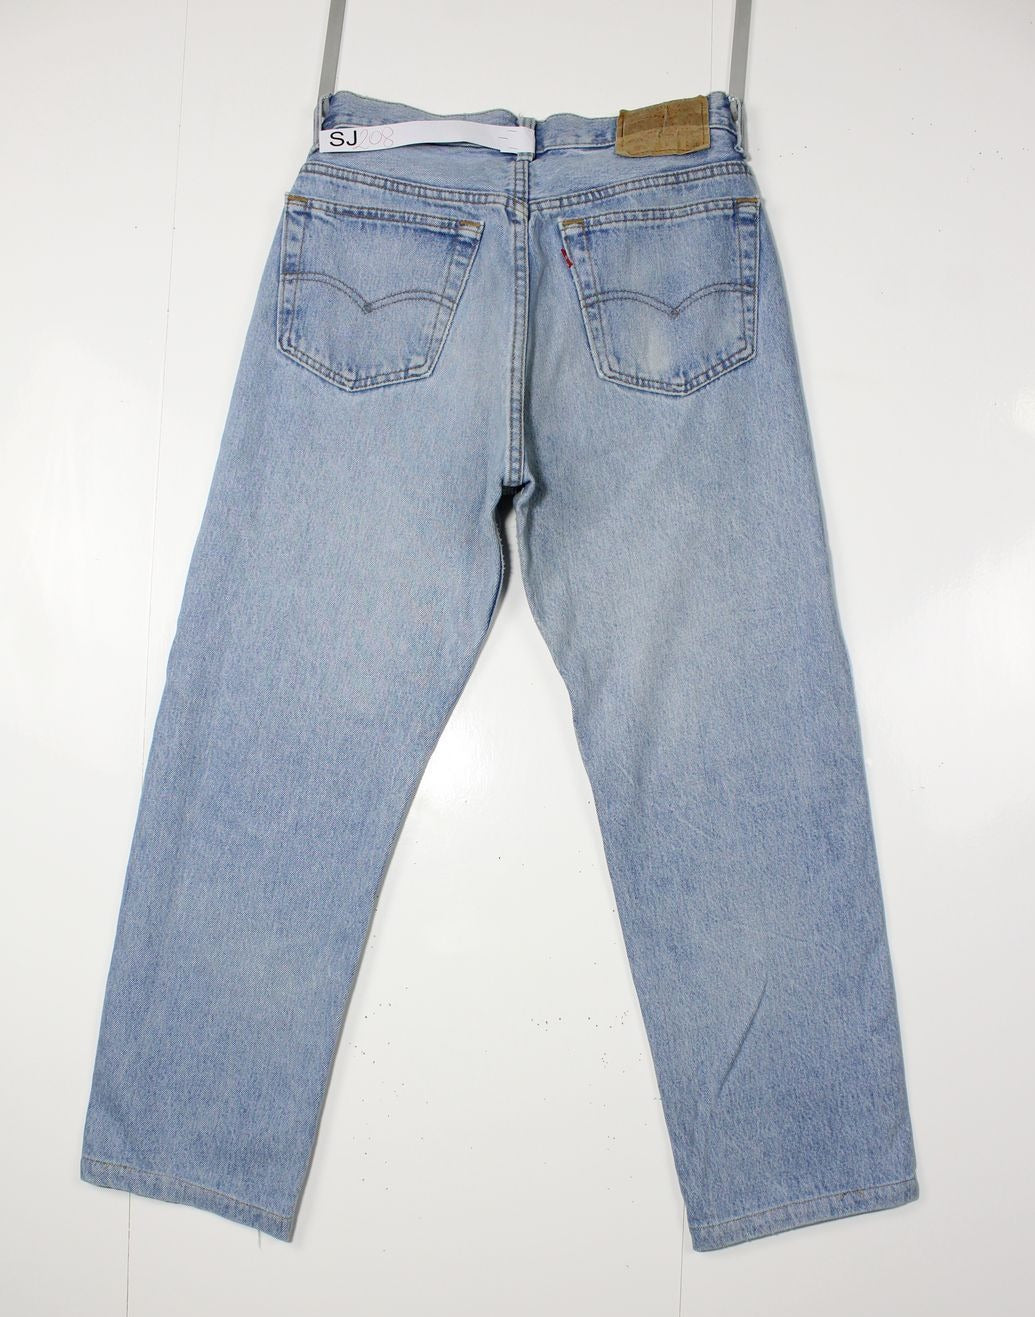 Levi's 501 Denim W32 L30 Made In USA Jeans Vintage